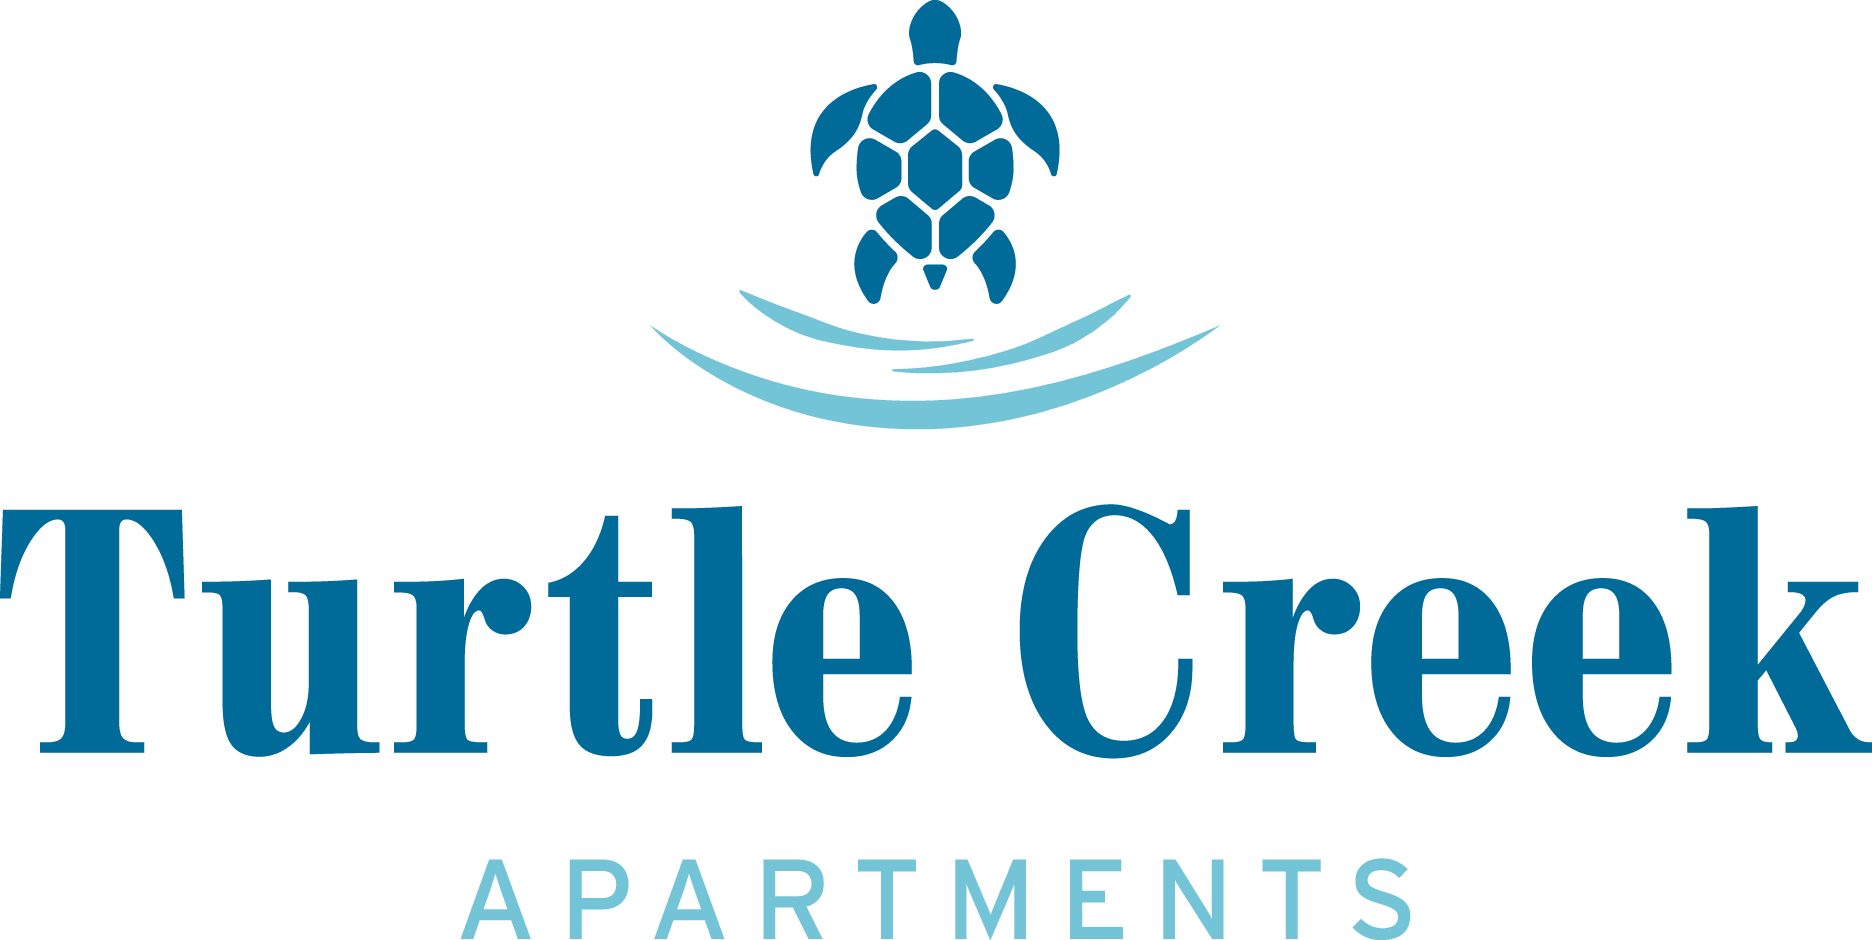 Turtle Creek Apartments